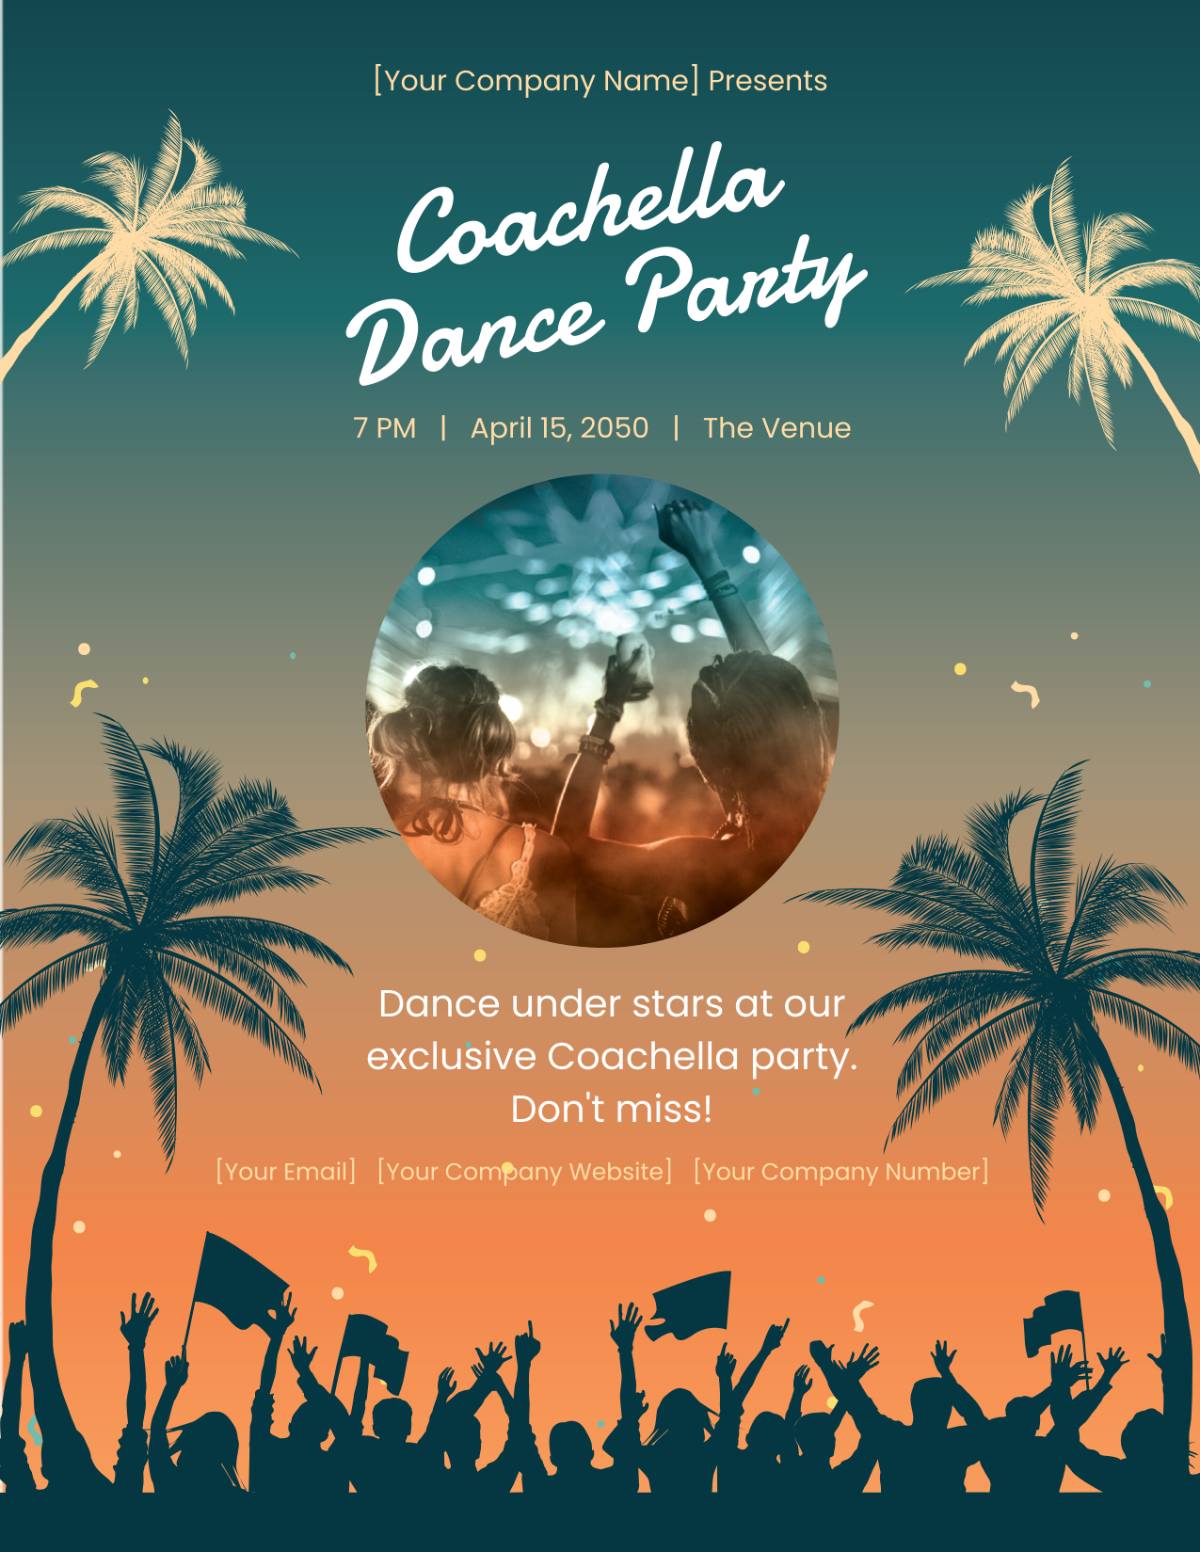 Coachella Dance Party Flyer Template